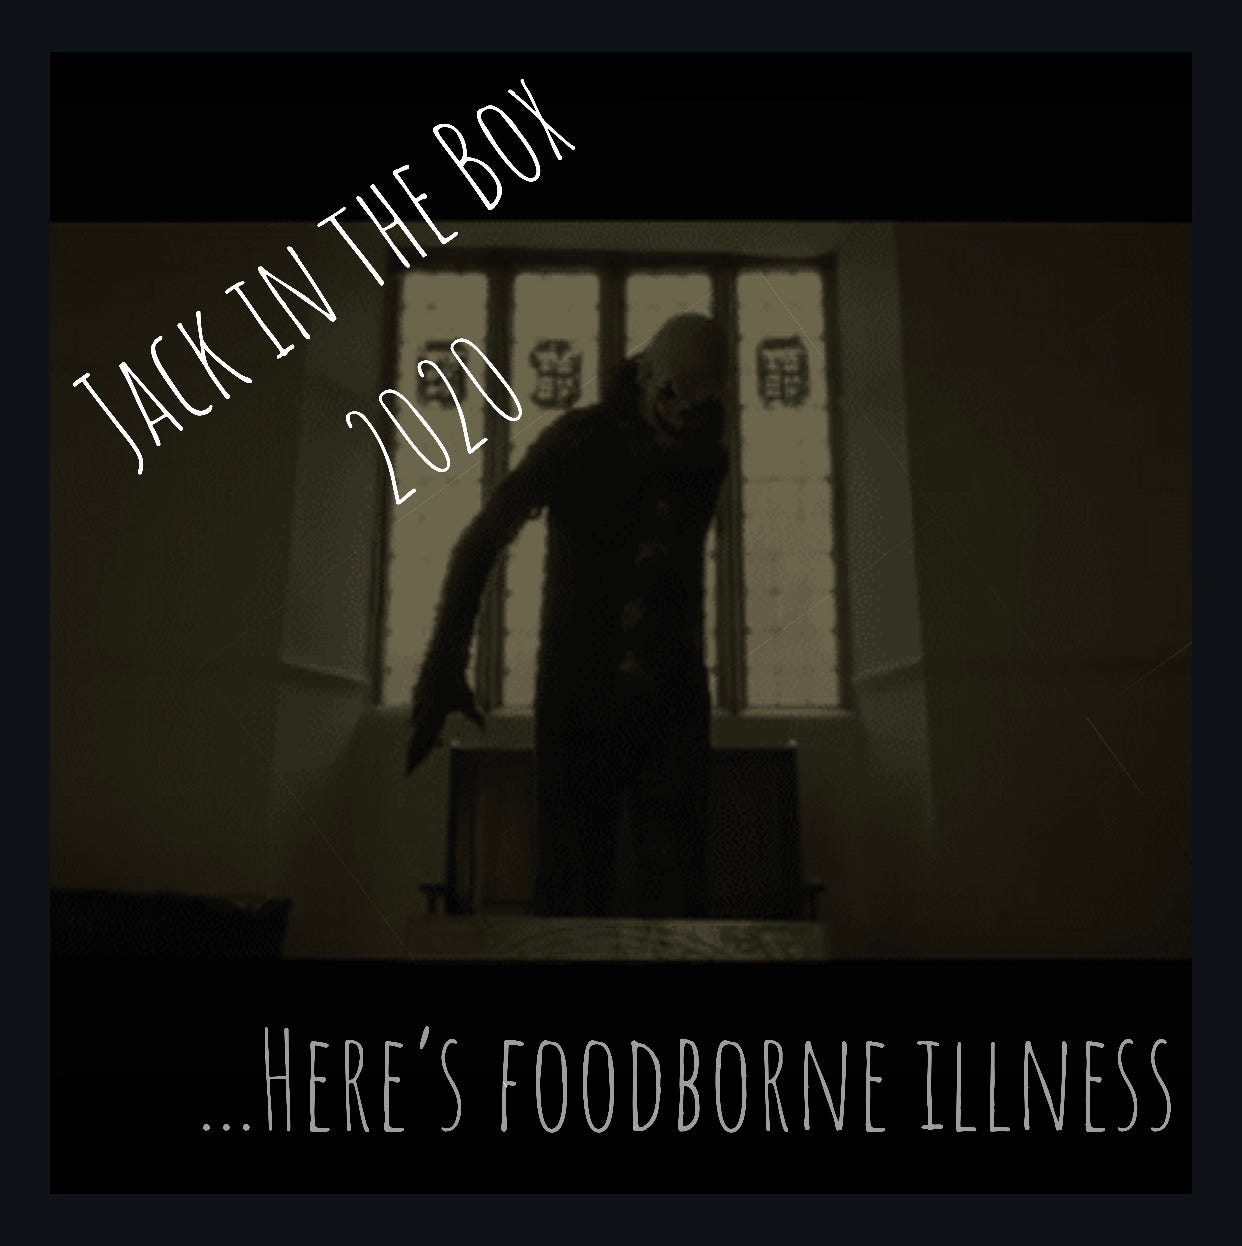 The Horror Movie Prattler: The Jack In The Box 2020 | by Lauren Alexis Wood  | Medium